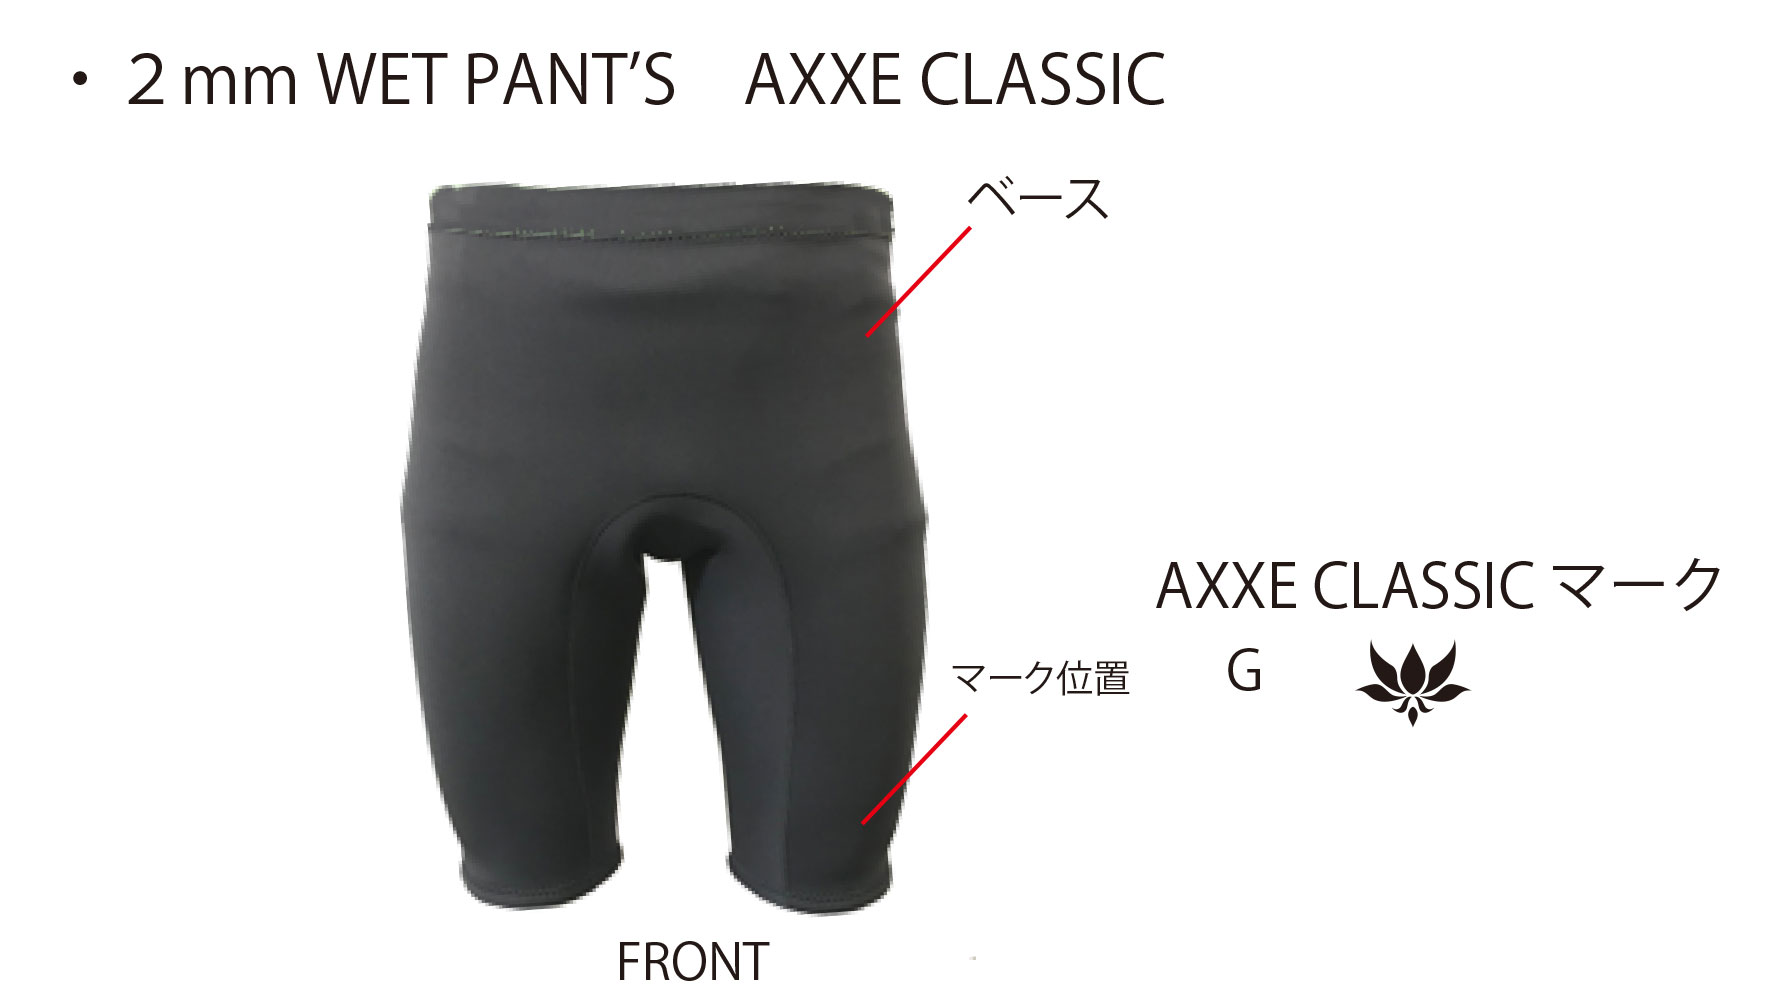 wet pants axxe classic